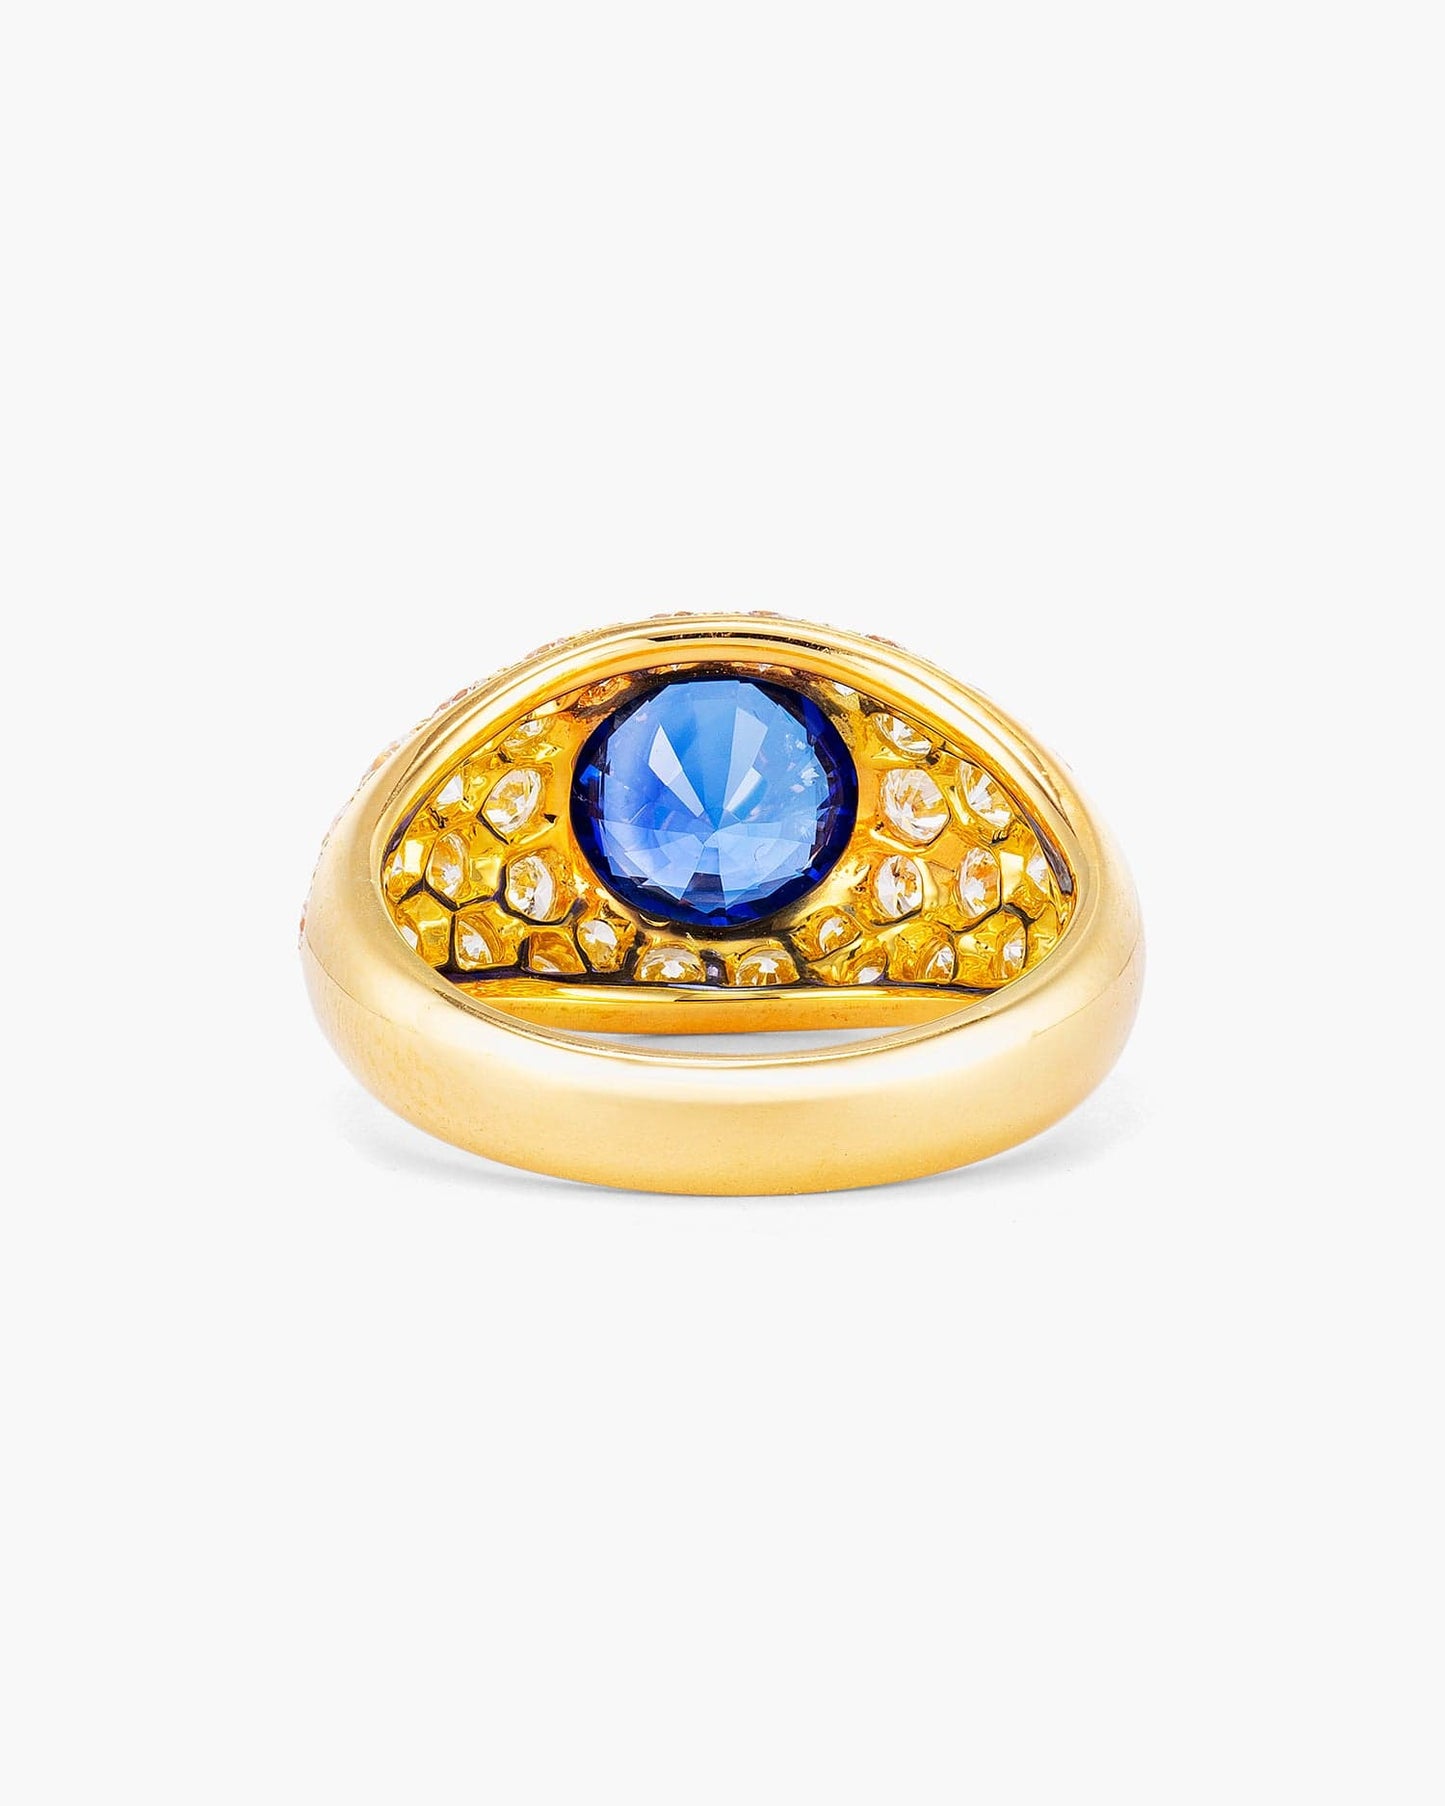 2.33 carat Round Cut Sapphire and Diamond Ring